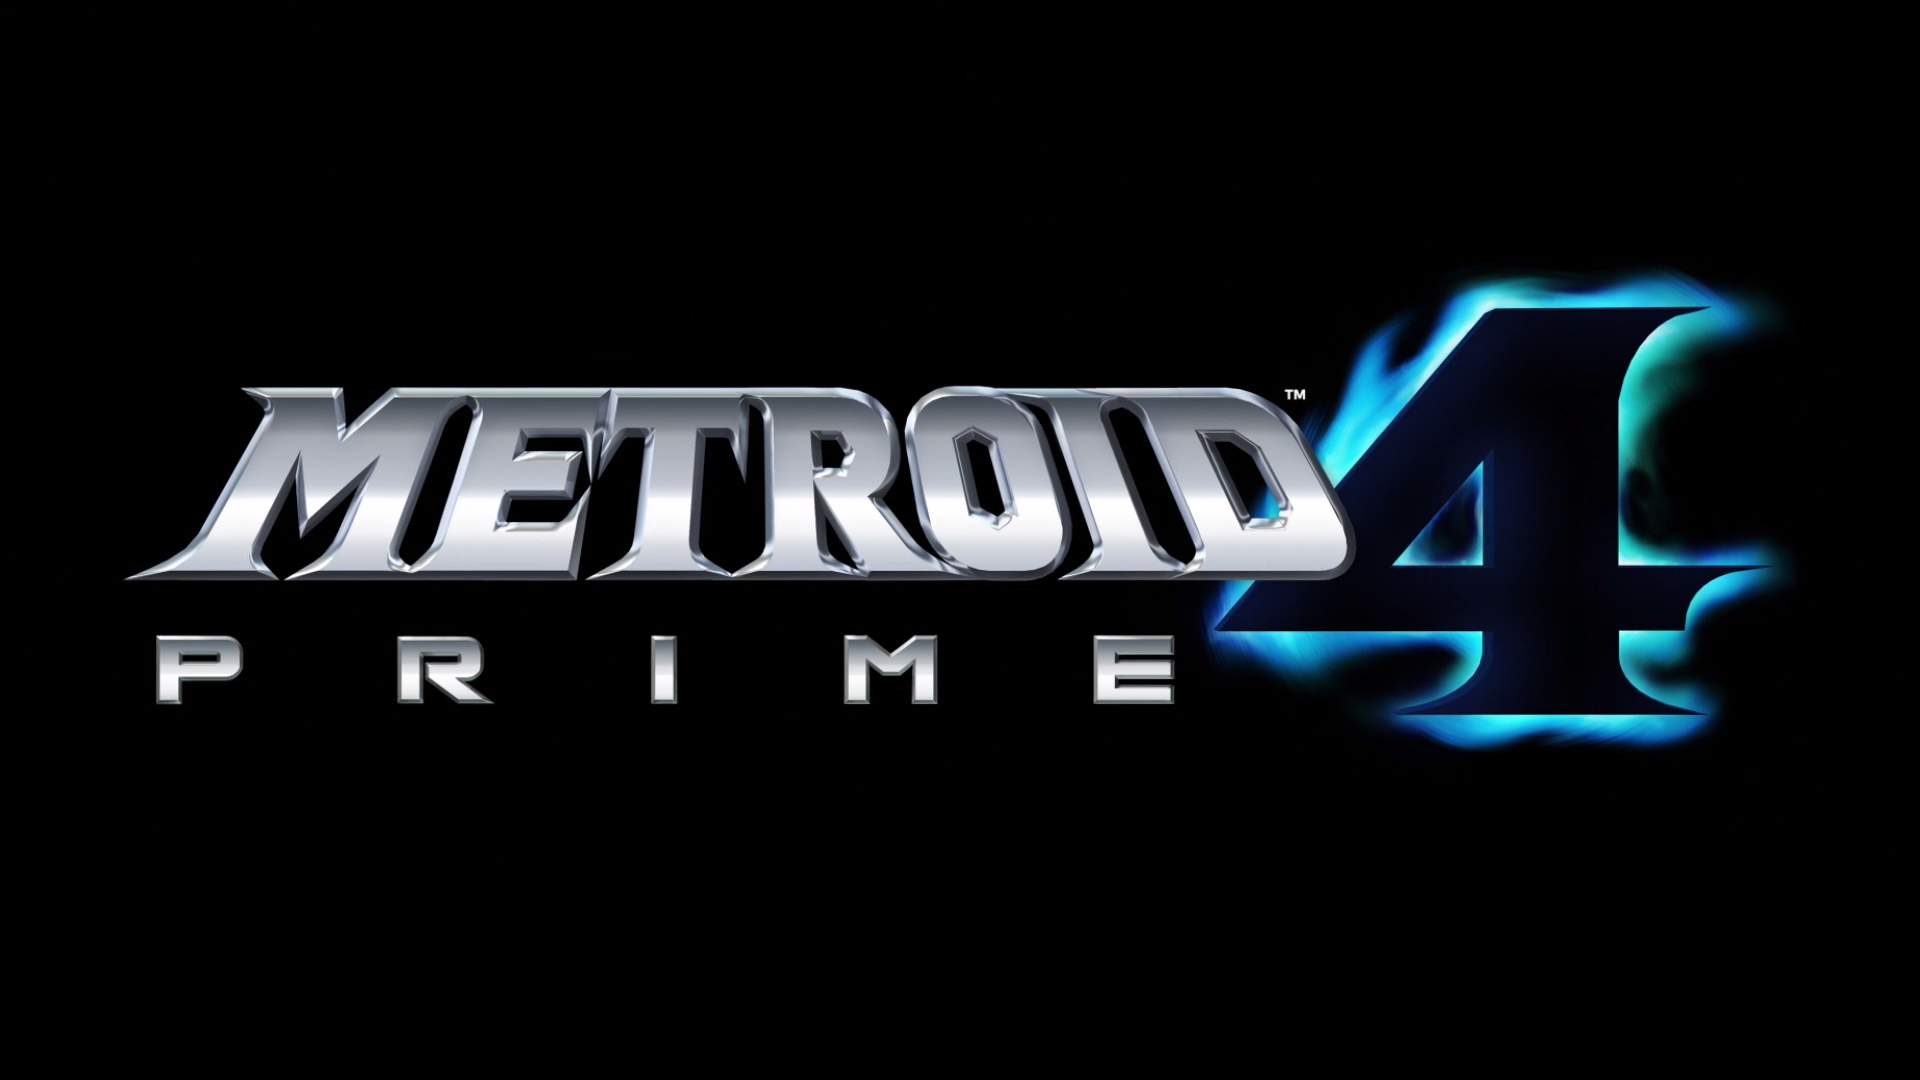 "Metroid Prime 4"